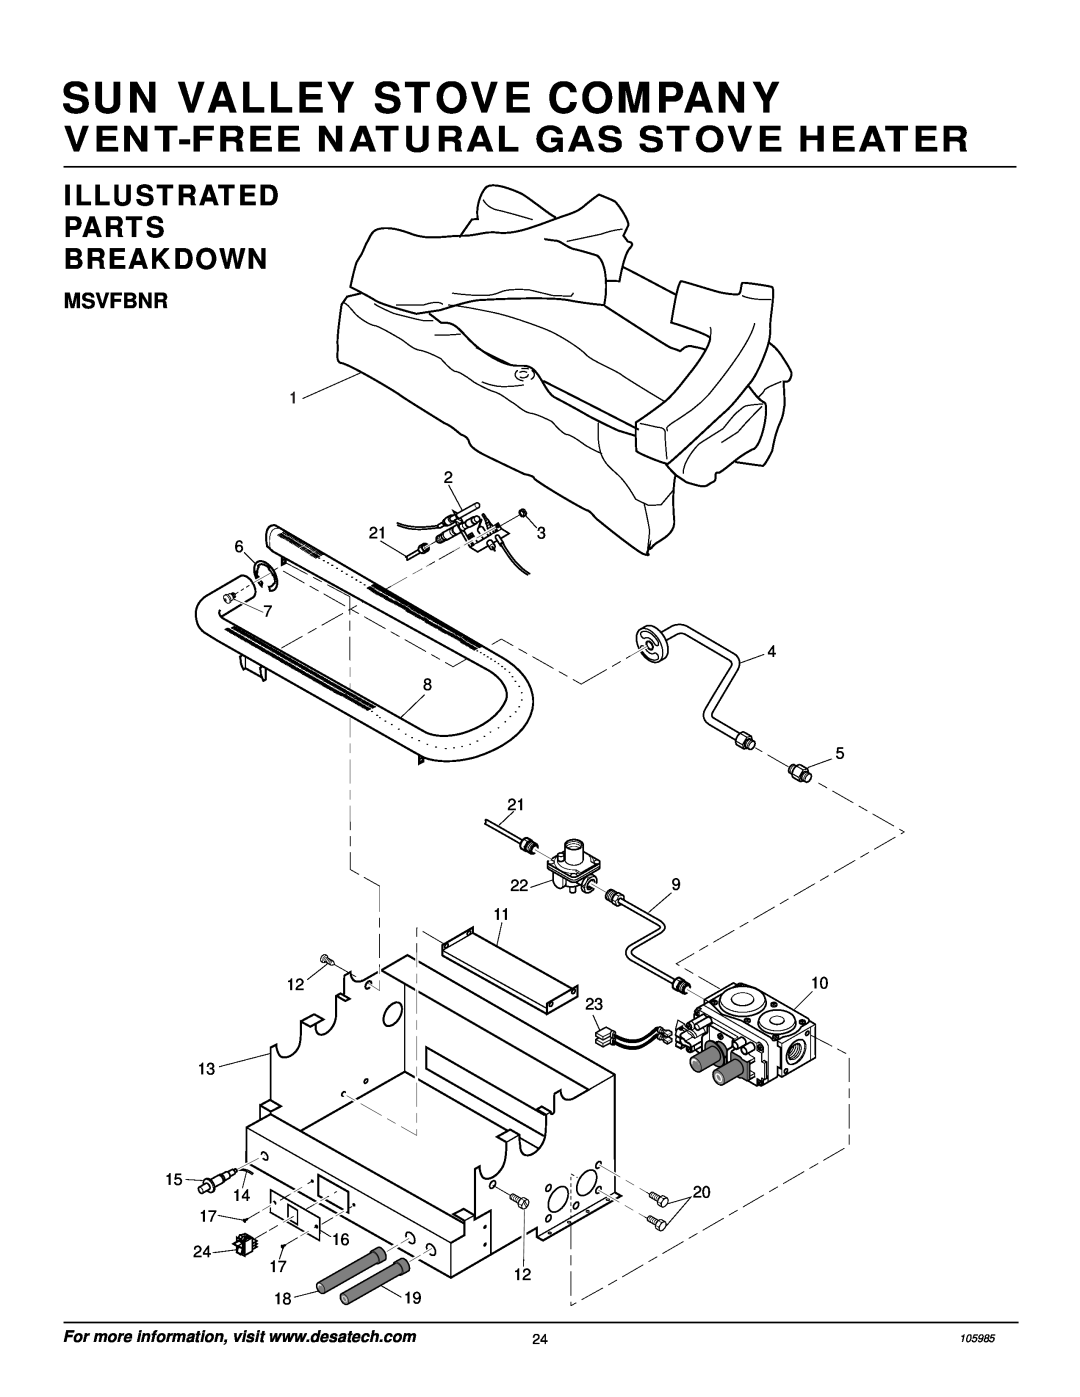 Desa MSVFBNR Series Illustrated Parts Breakdown, Msvfbnr, Sun Valley Stove Company, Vent-Freenatural Gas Stove Heater 